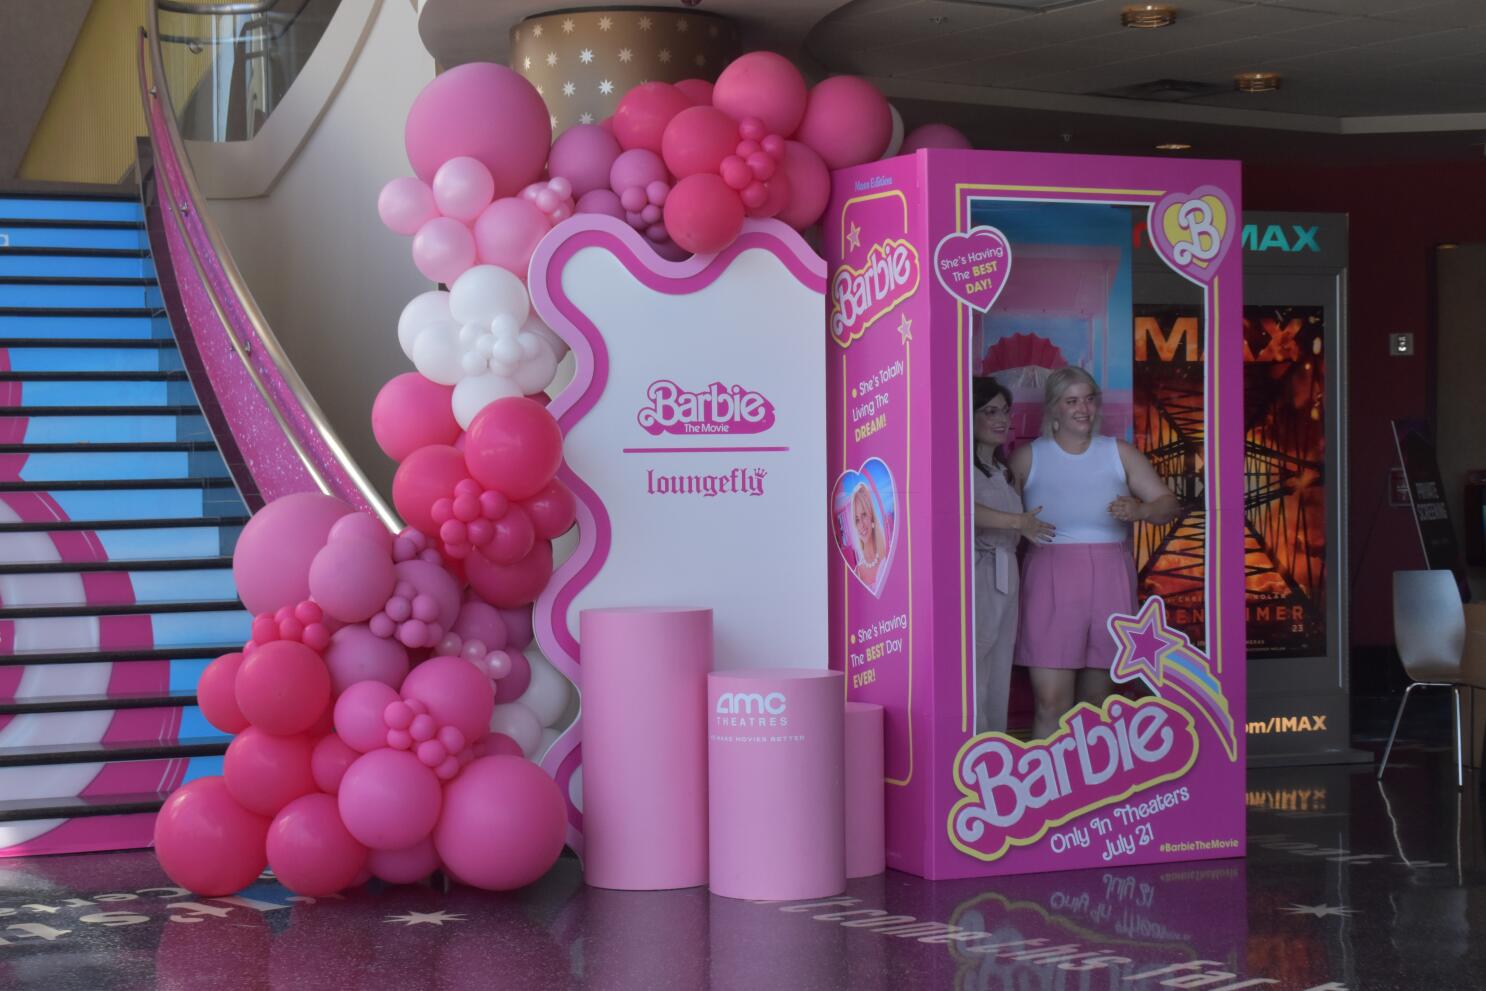 Un hombre destruye accidentalmente un photocall de Barbie por